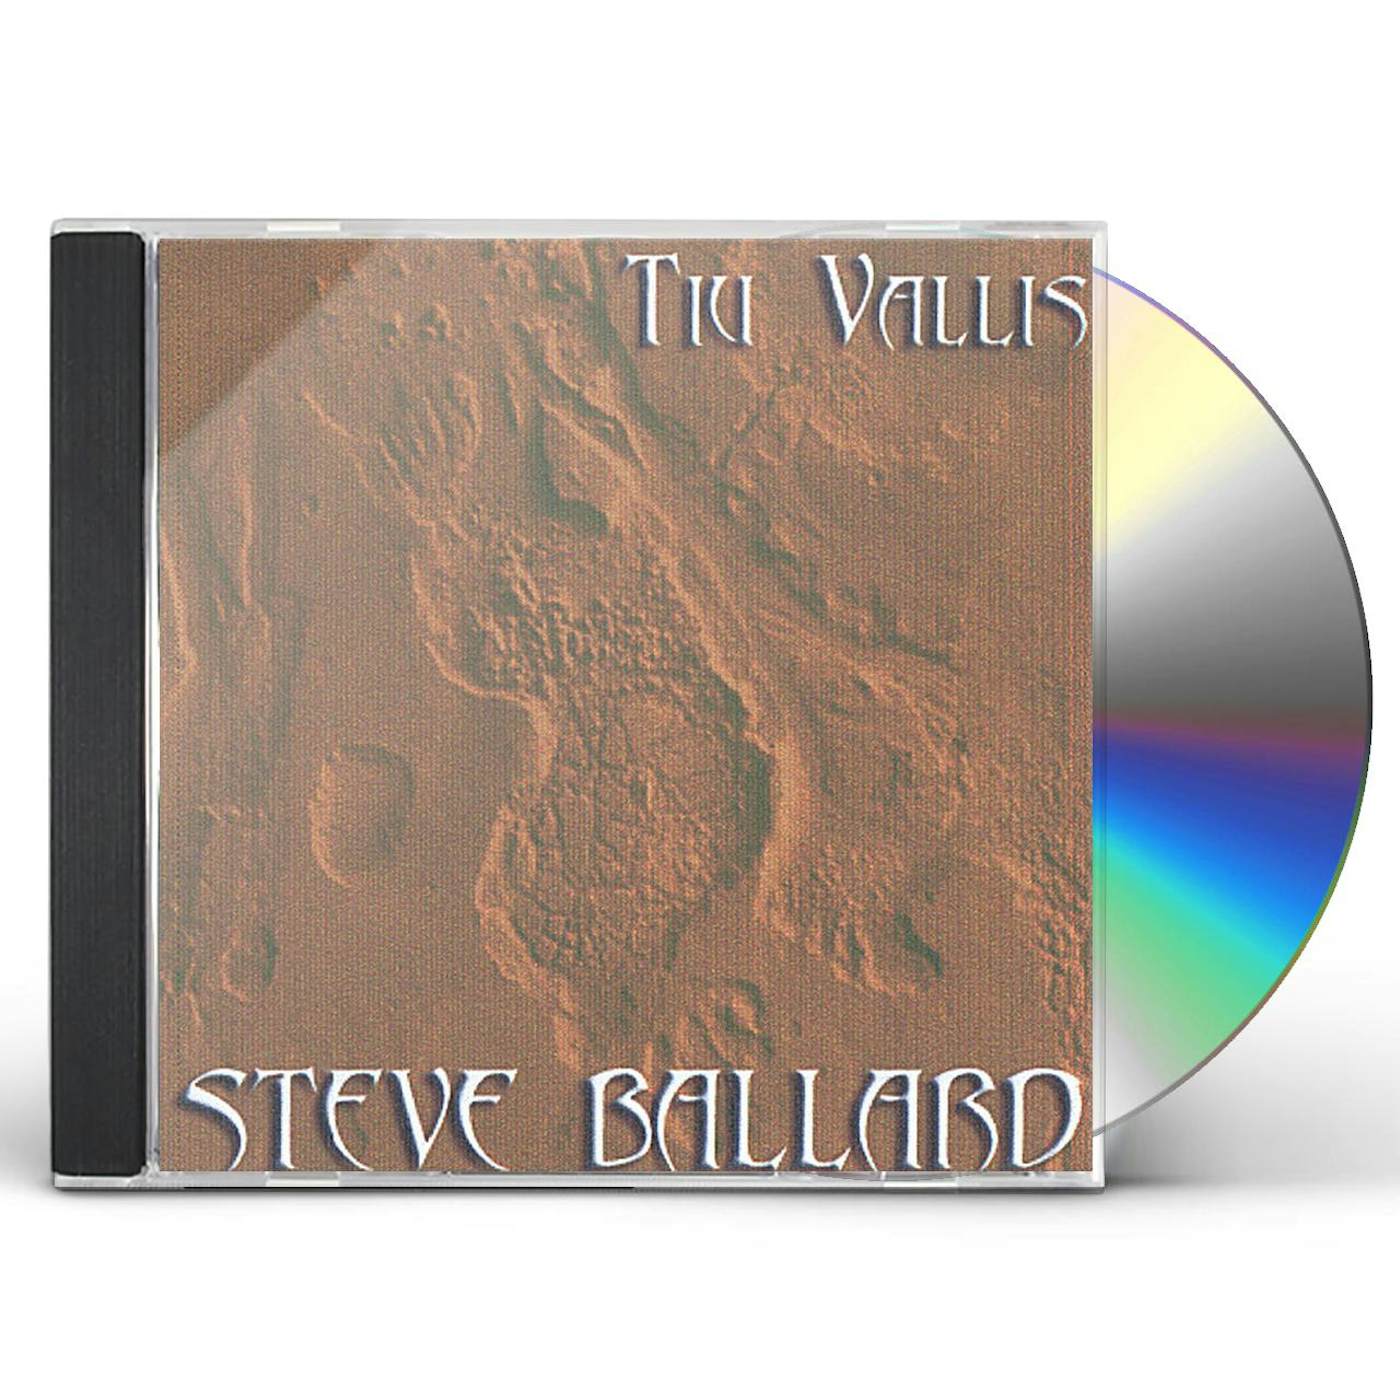 Steve Ballard TIU VALLIS CD